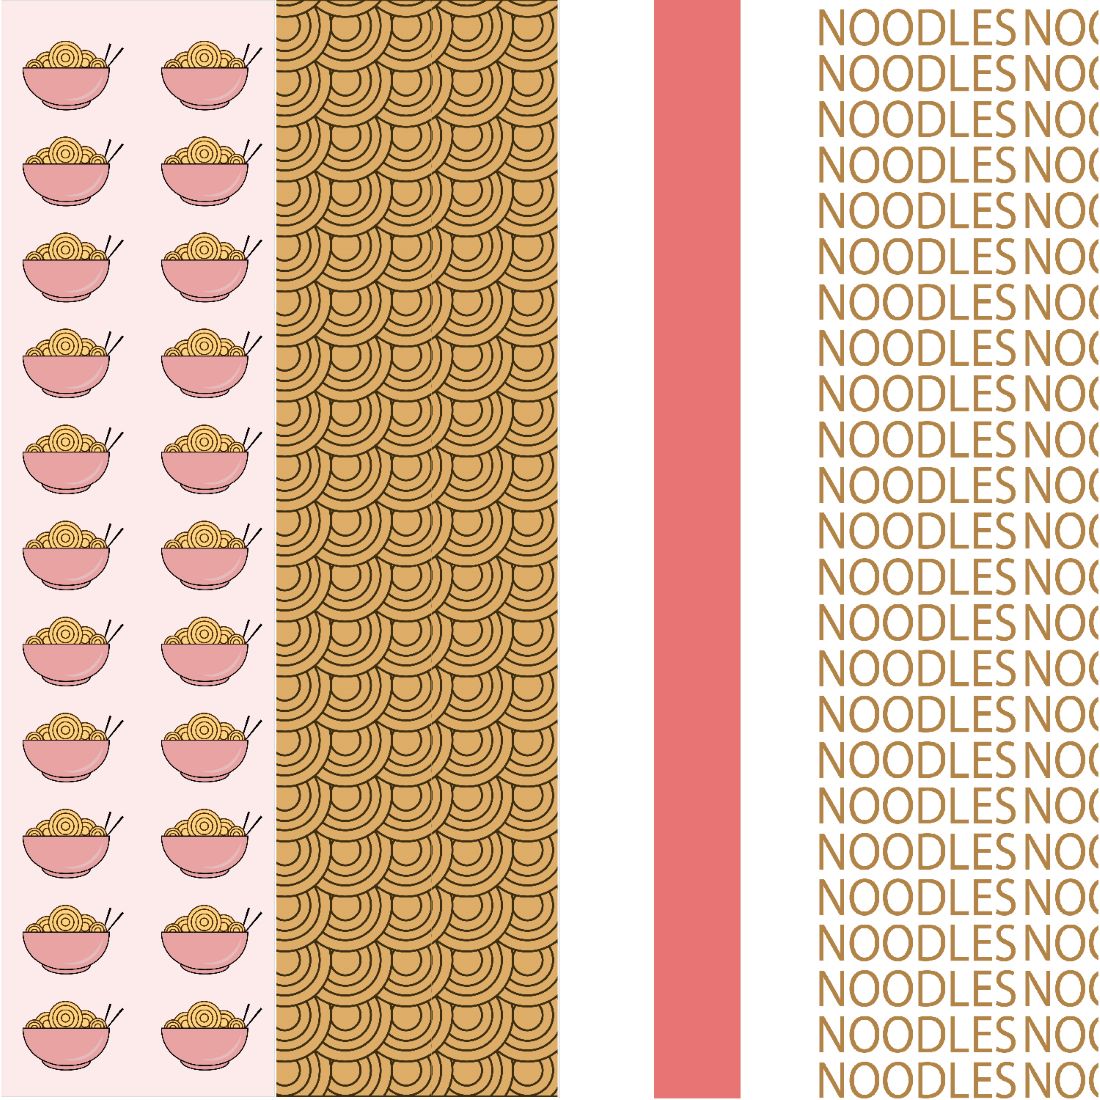 Noodles Theme Patterns preview.